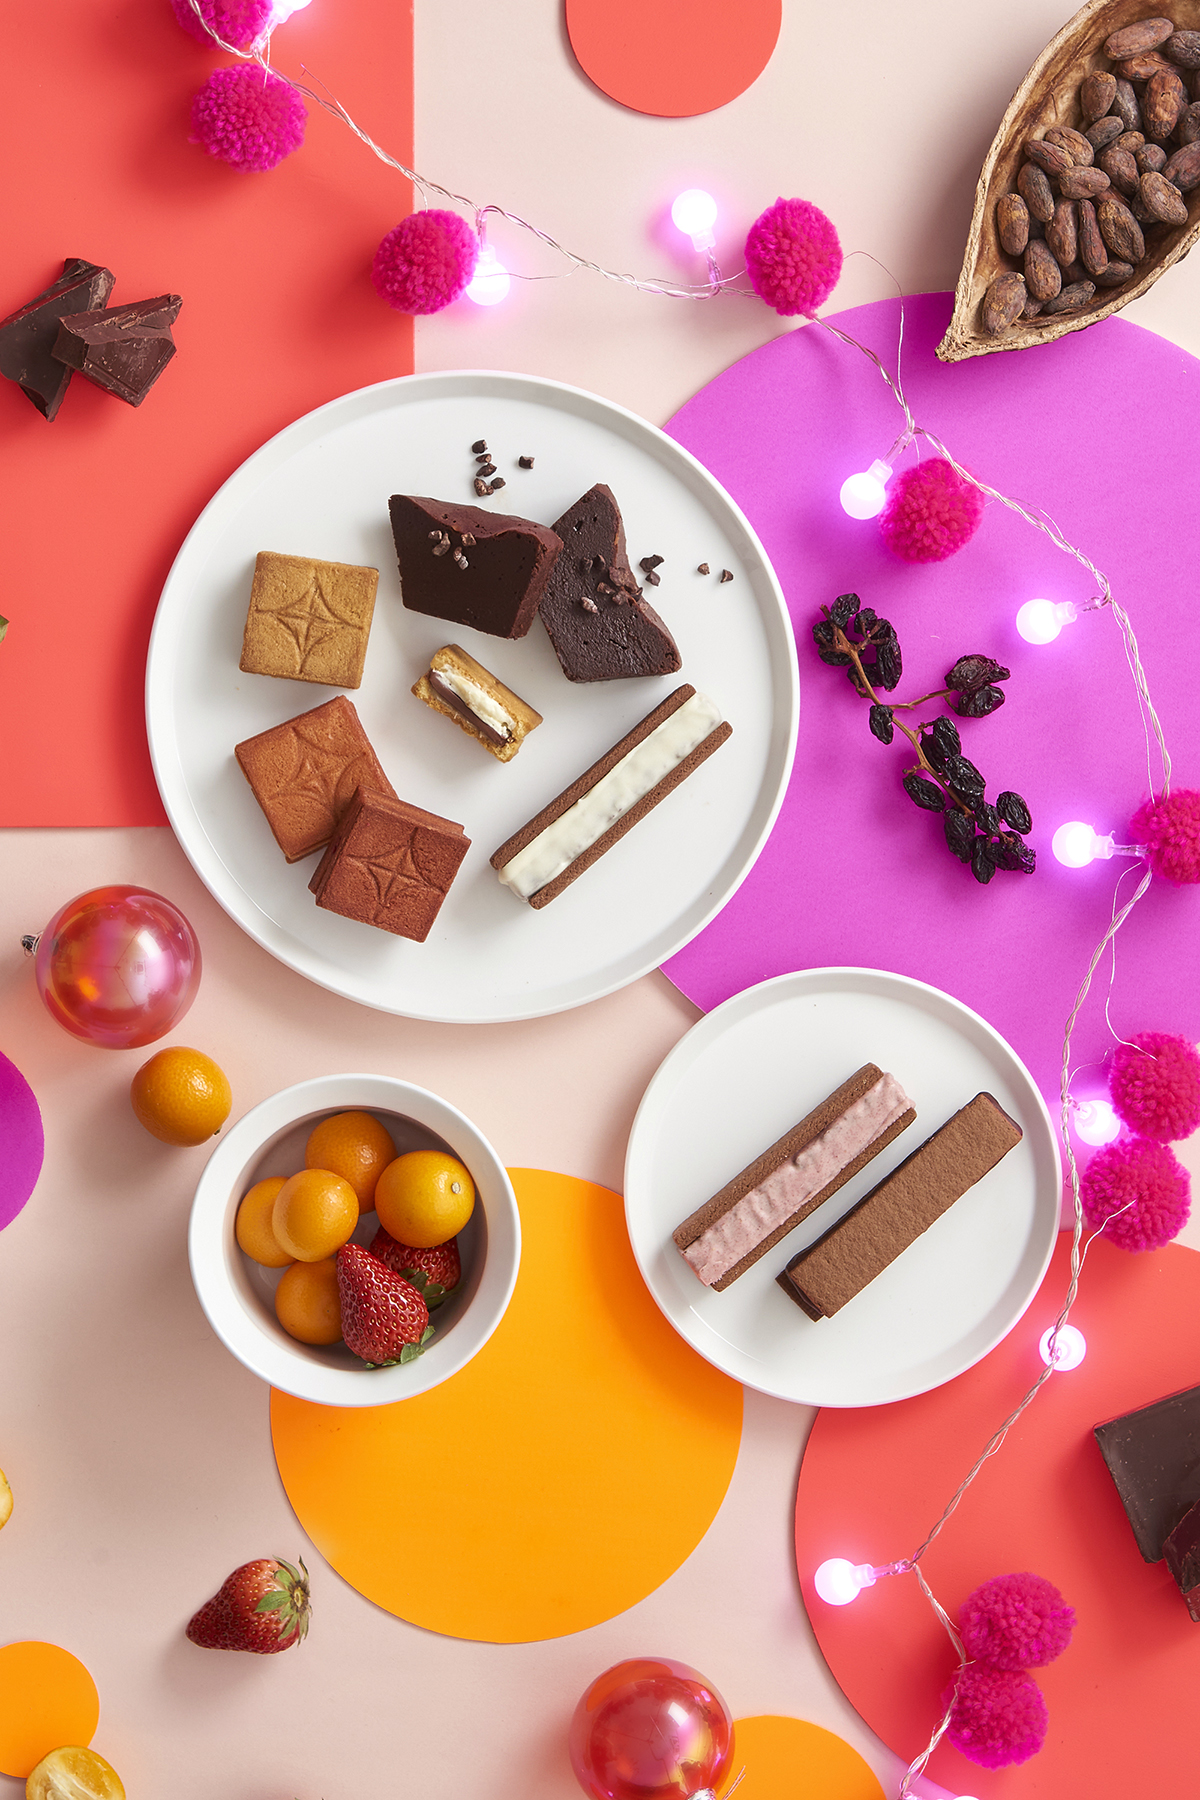 BAKE THE ONLINE「バレンタイン限定セット」BAKE CHOCOLATE MAGIC1